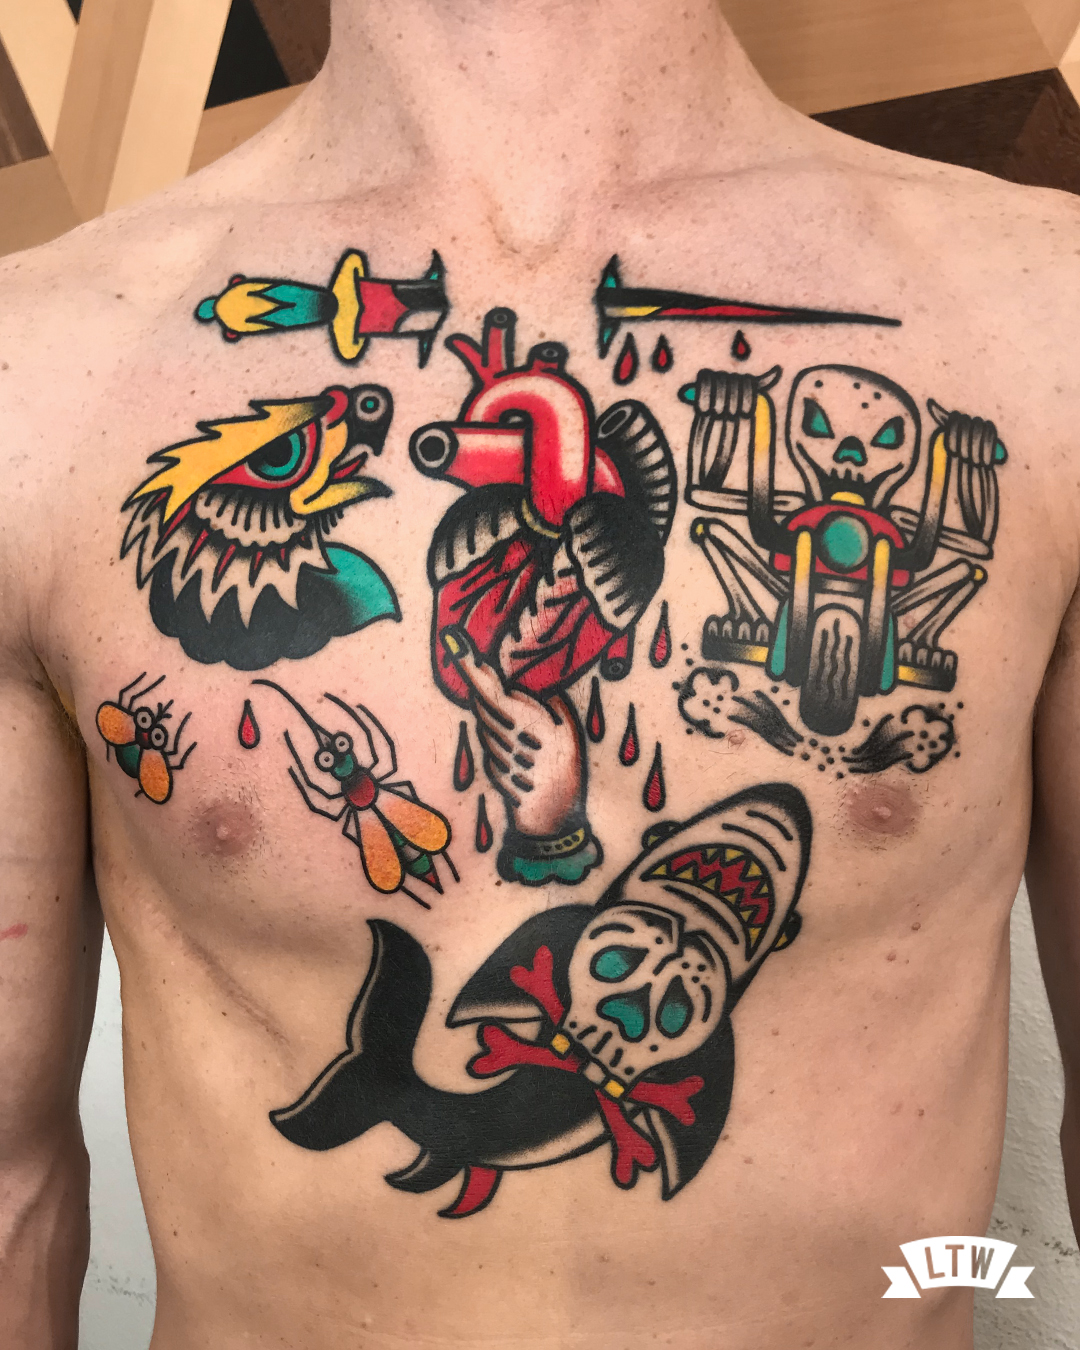 Tattooed torso by Javier Rodríguez